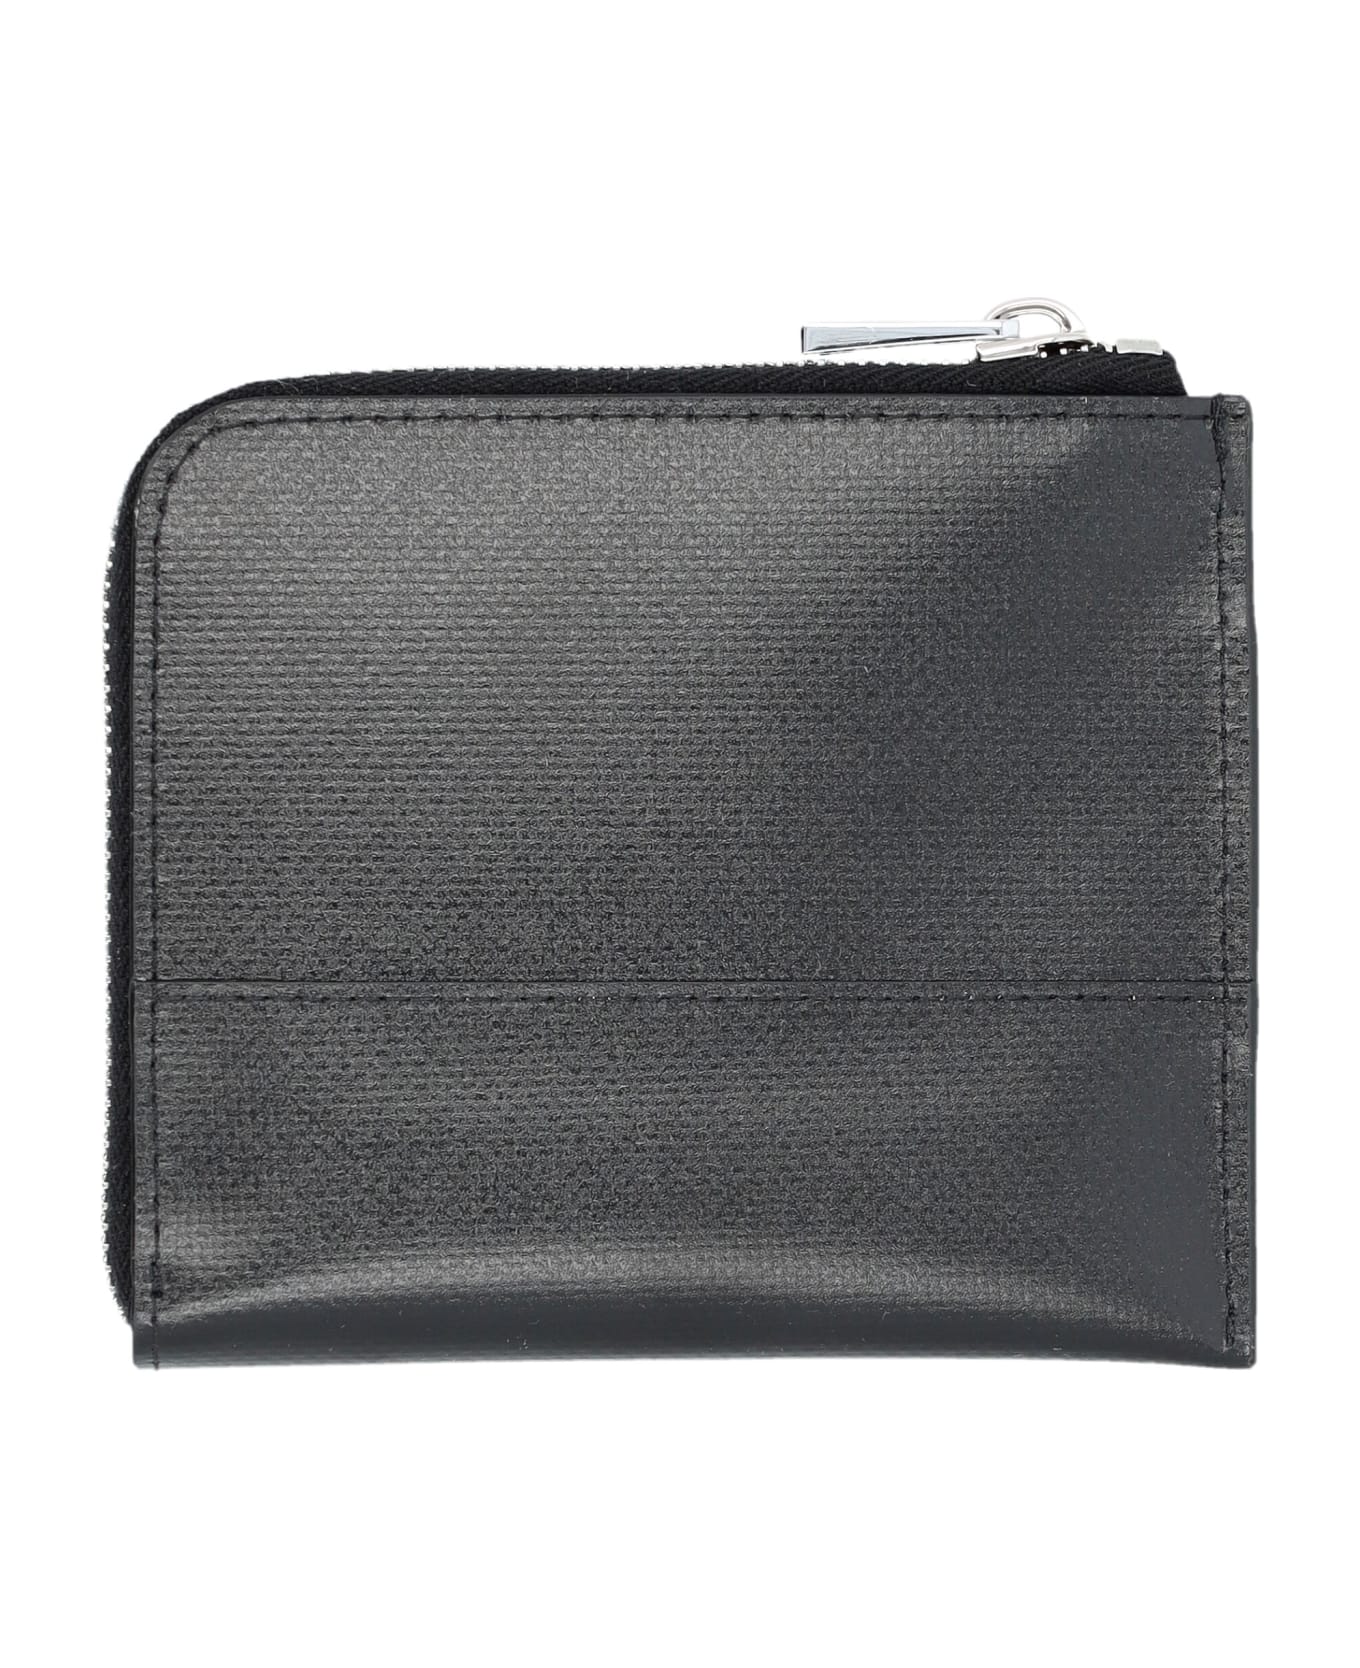 Marni Zip Wallet - BLACK